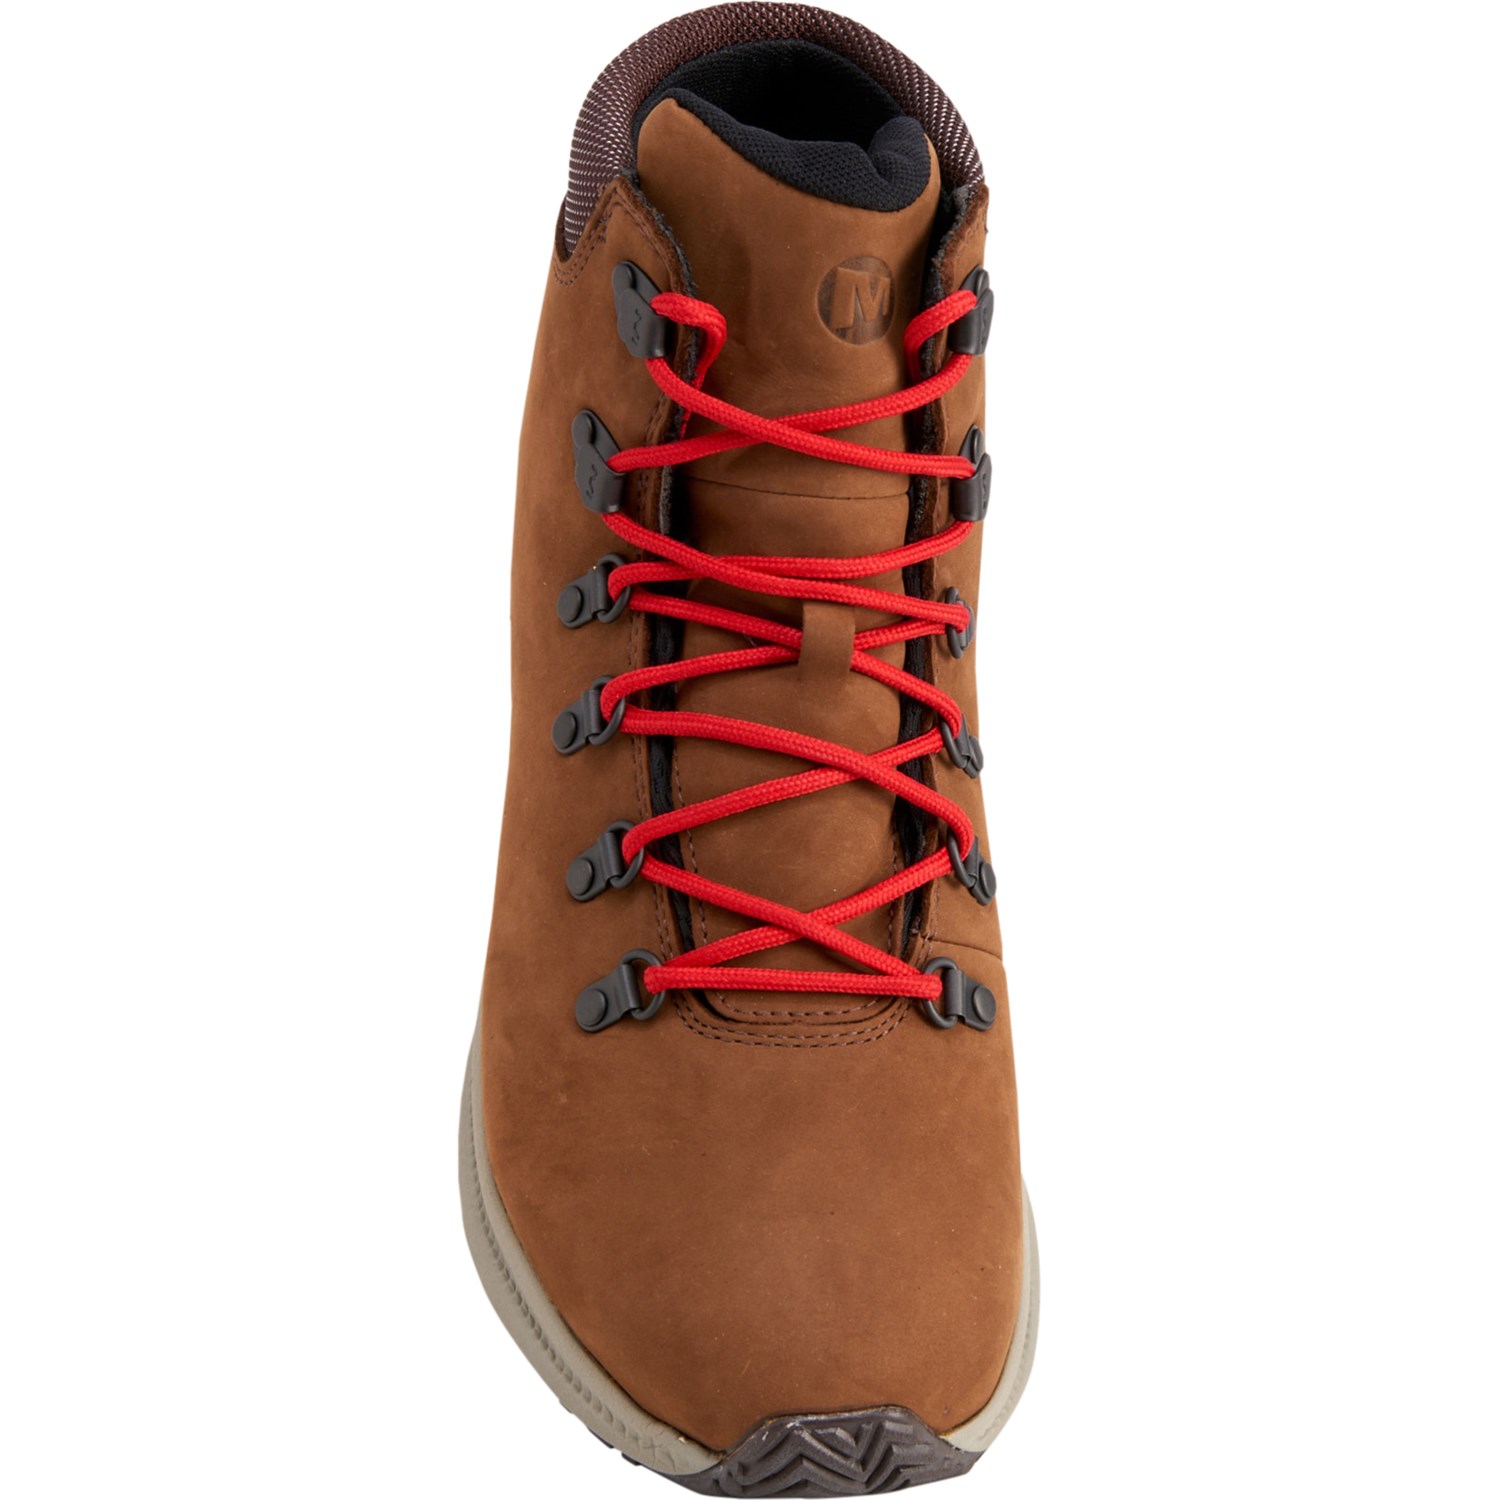 Buy > merrell ontario mid waterproof hiking boots review > in stock